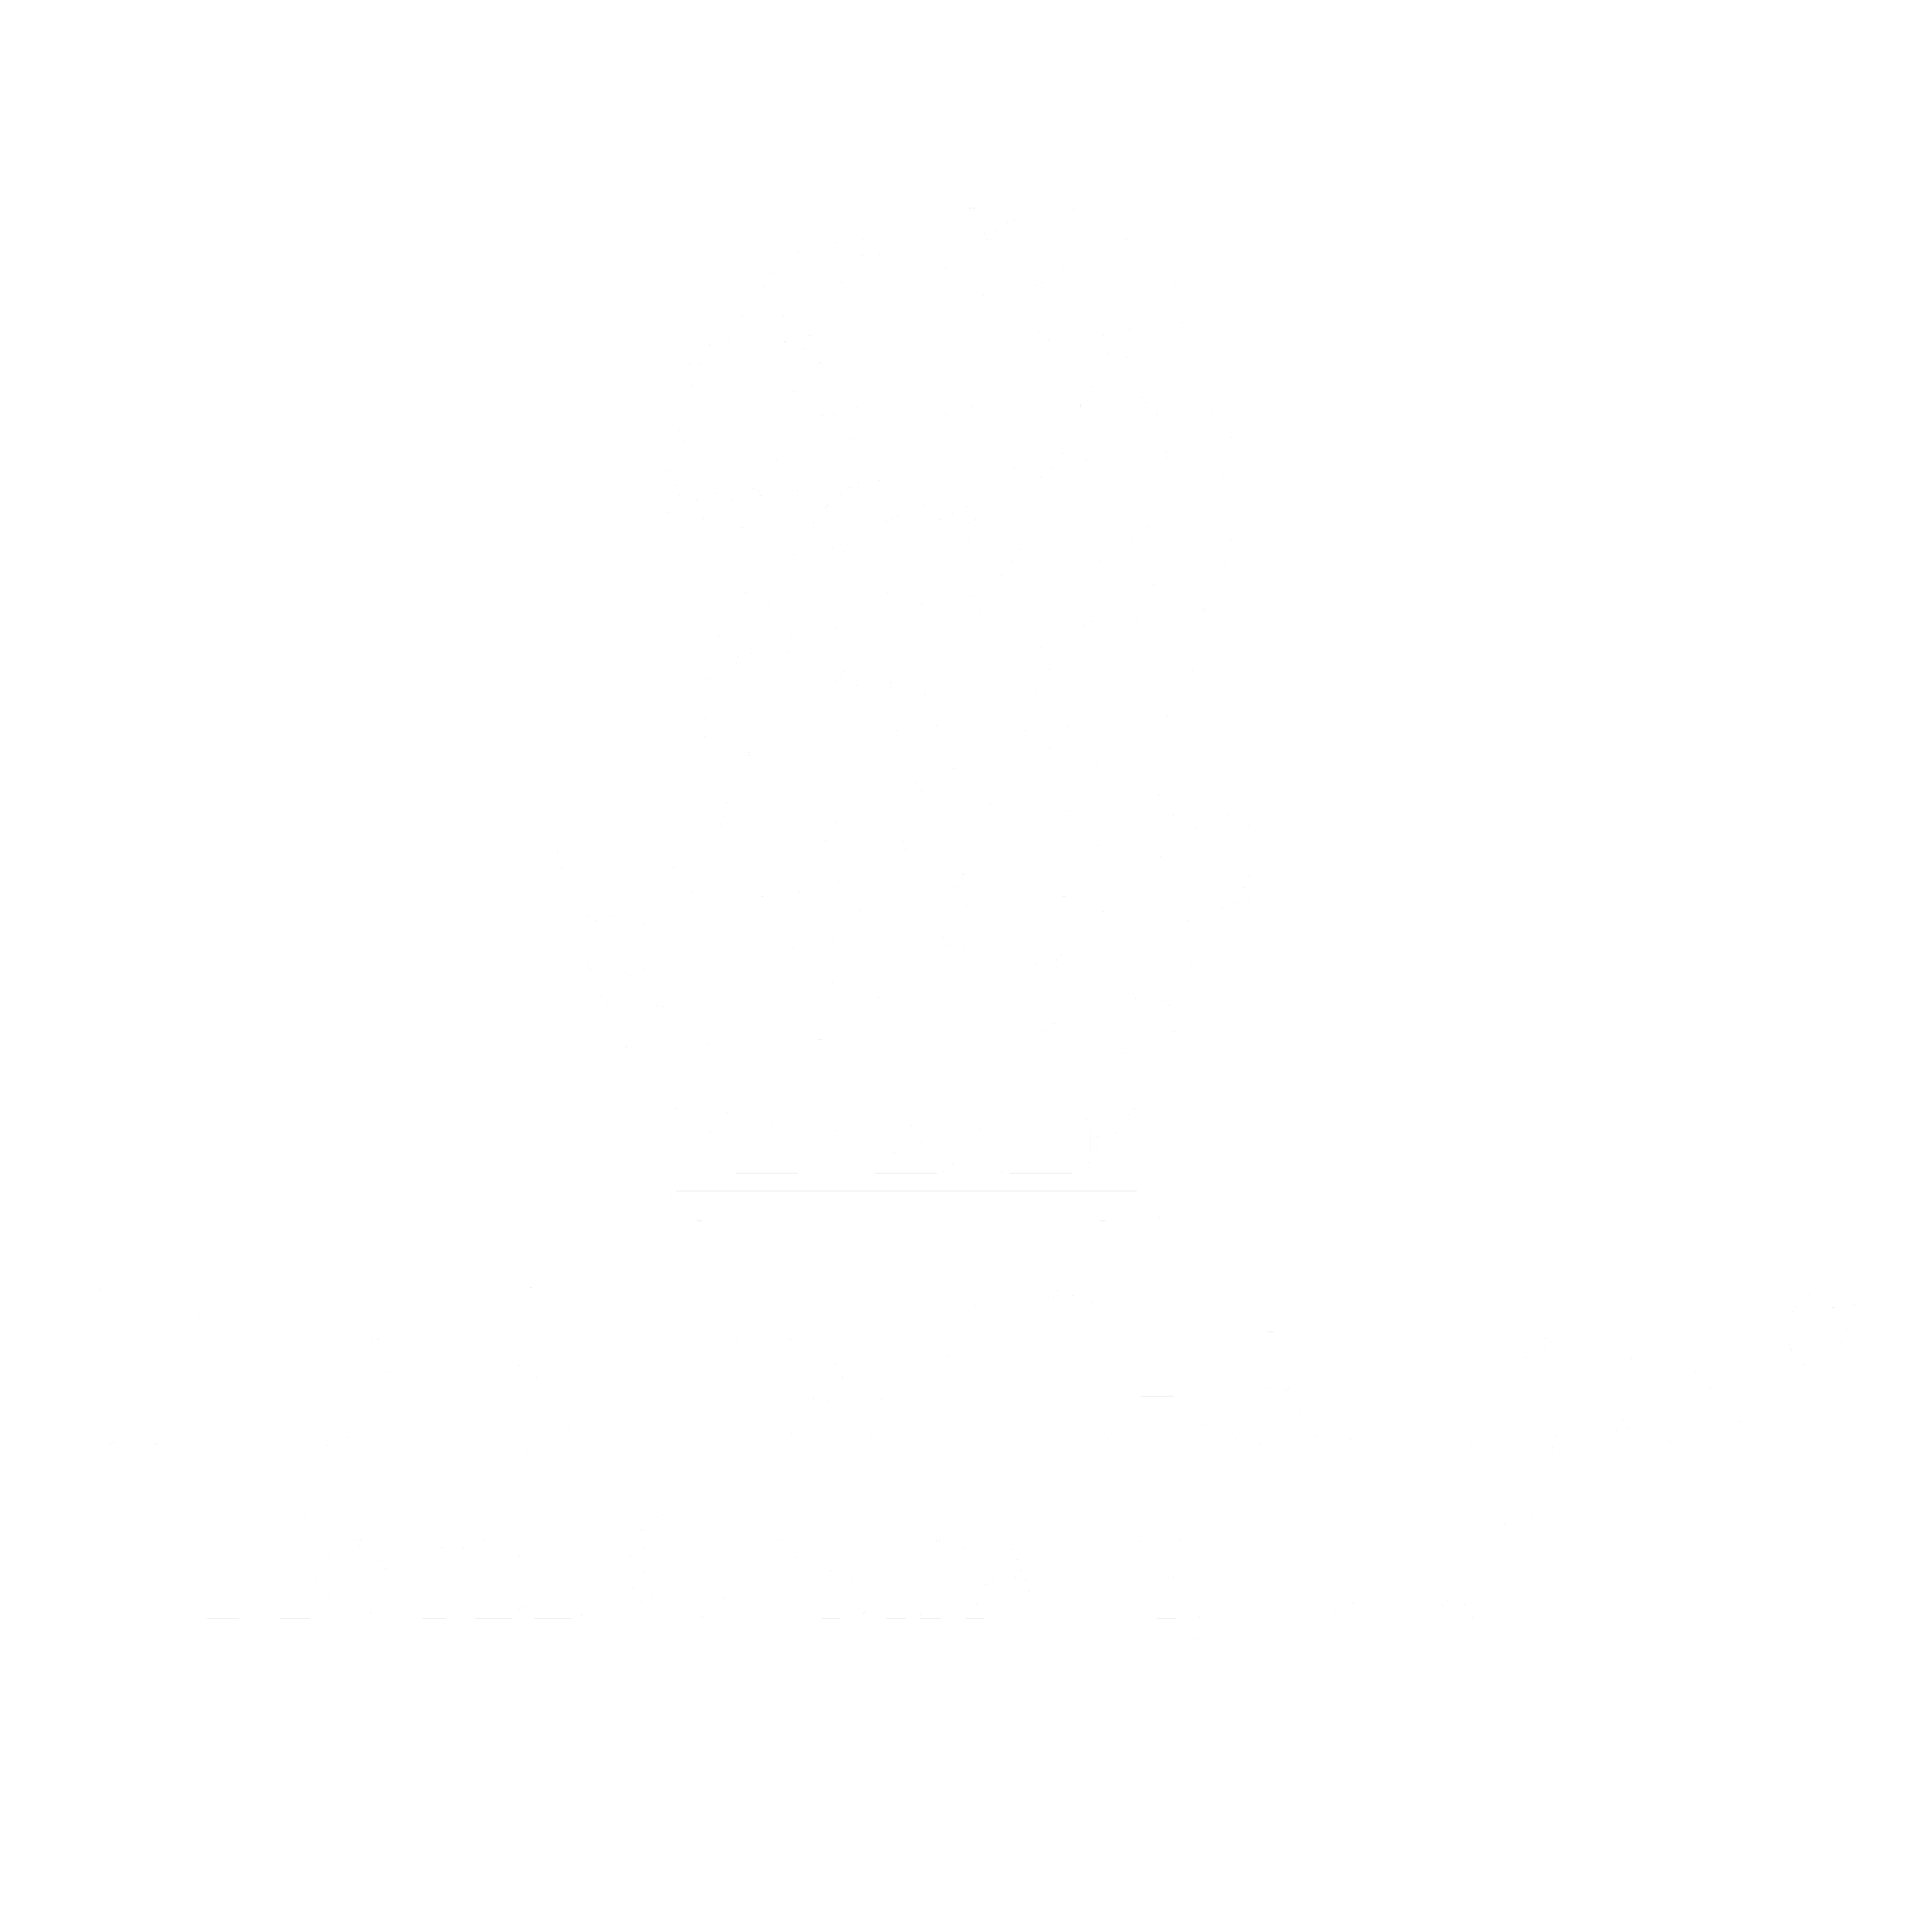 the-ritz-carlton-1-logo-black-and-white.png